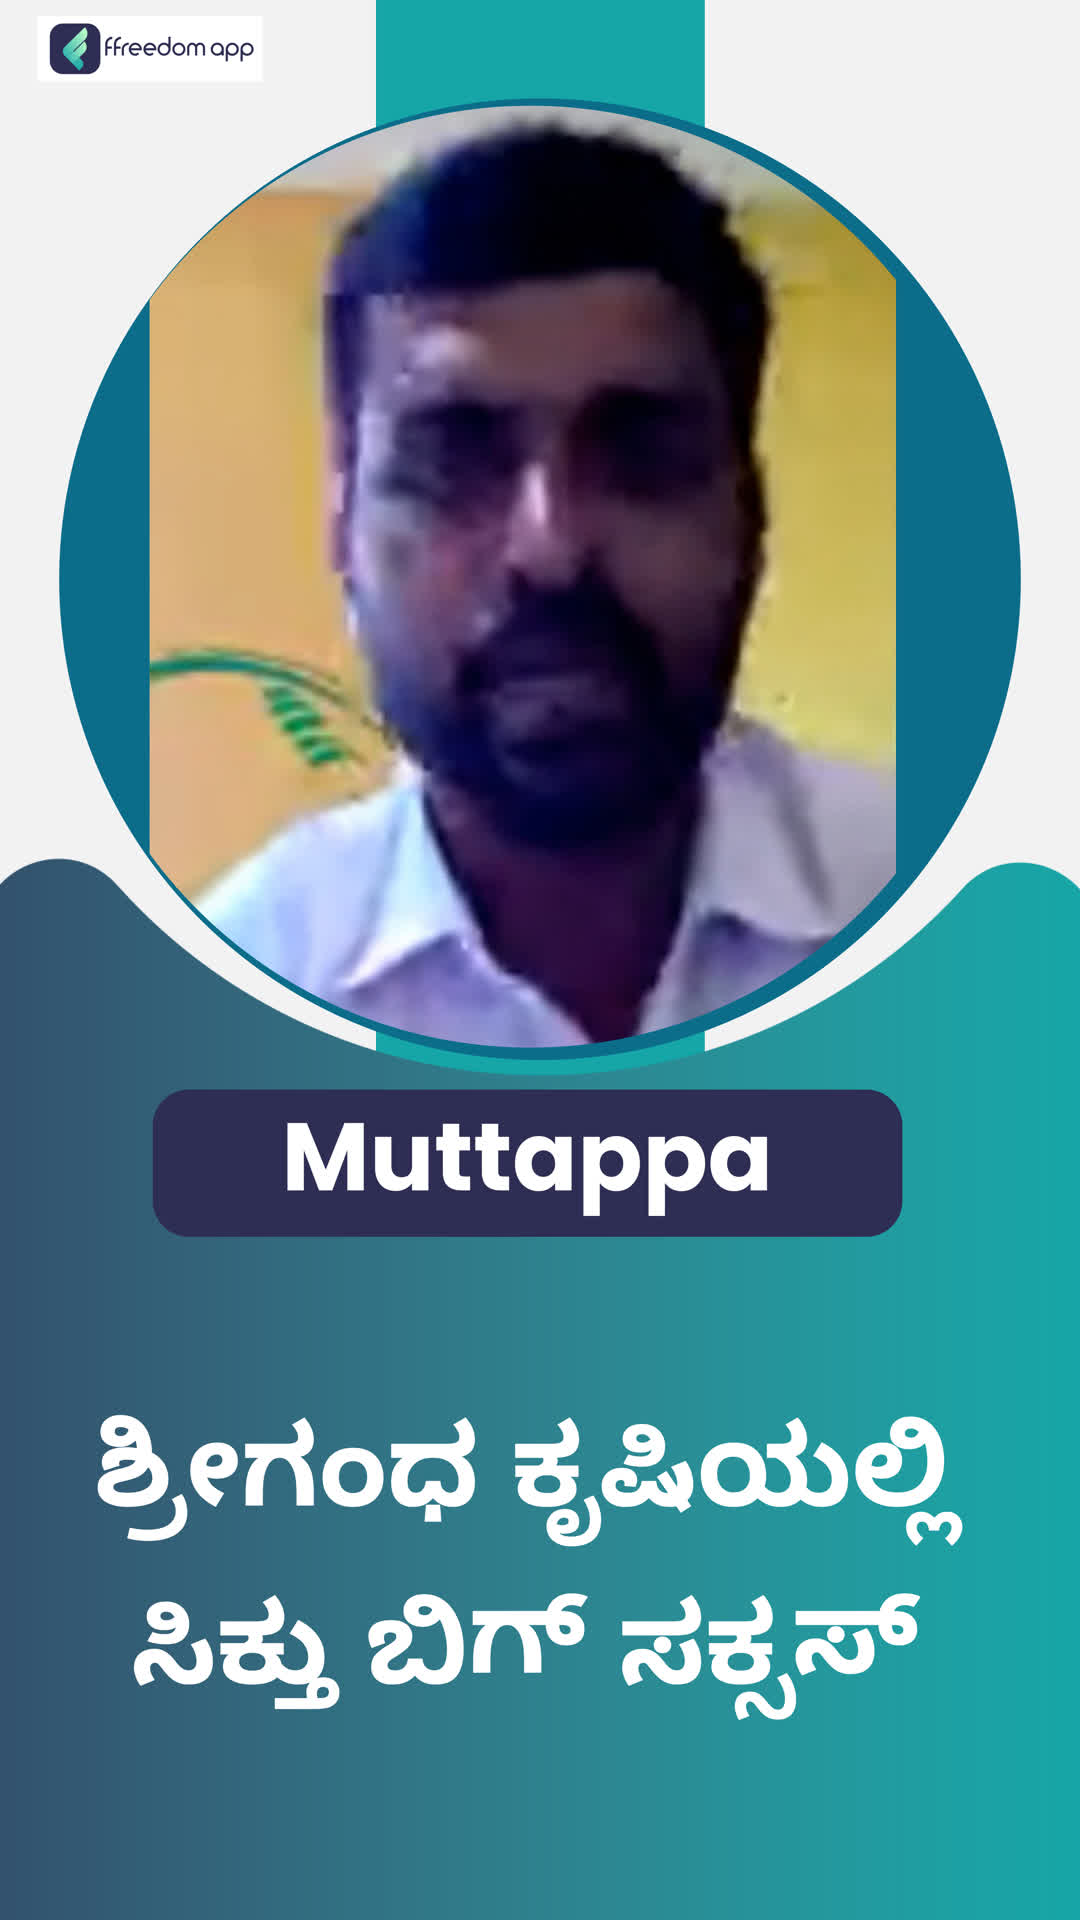 Muttappa Kalasad's Honest Review of ffreedom app - Haveri ,Karnataka